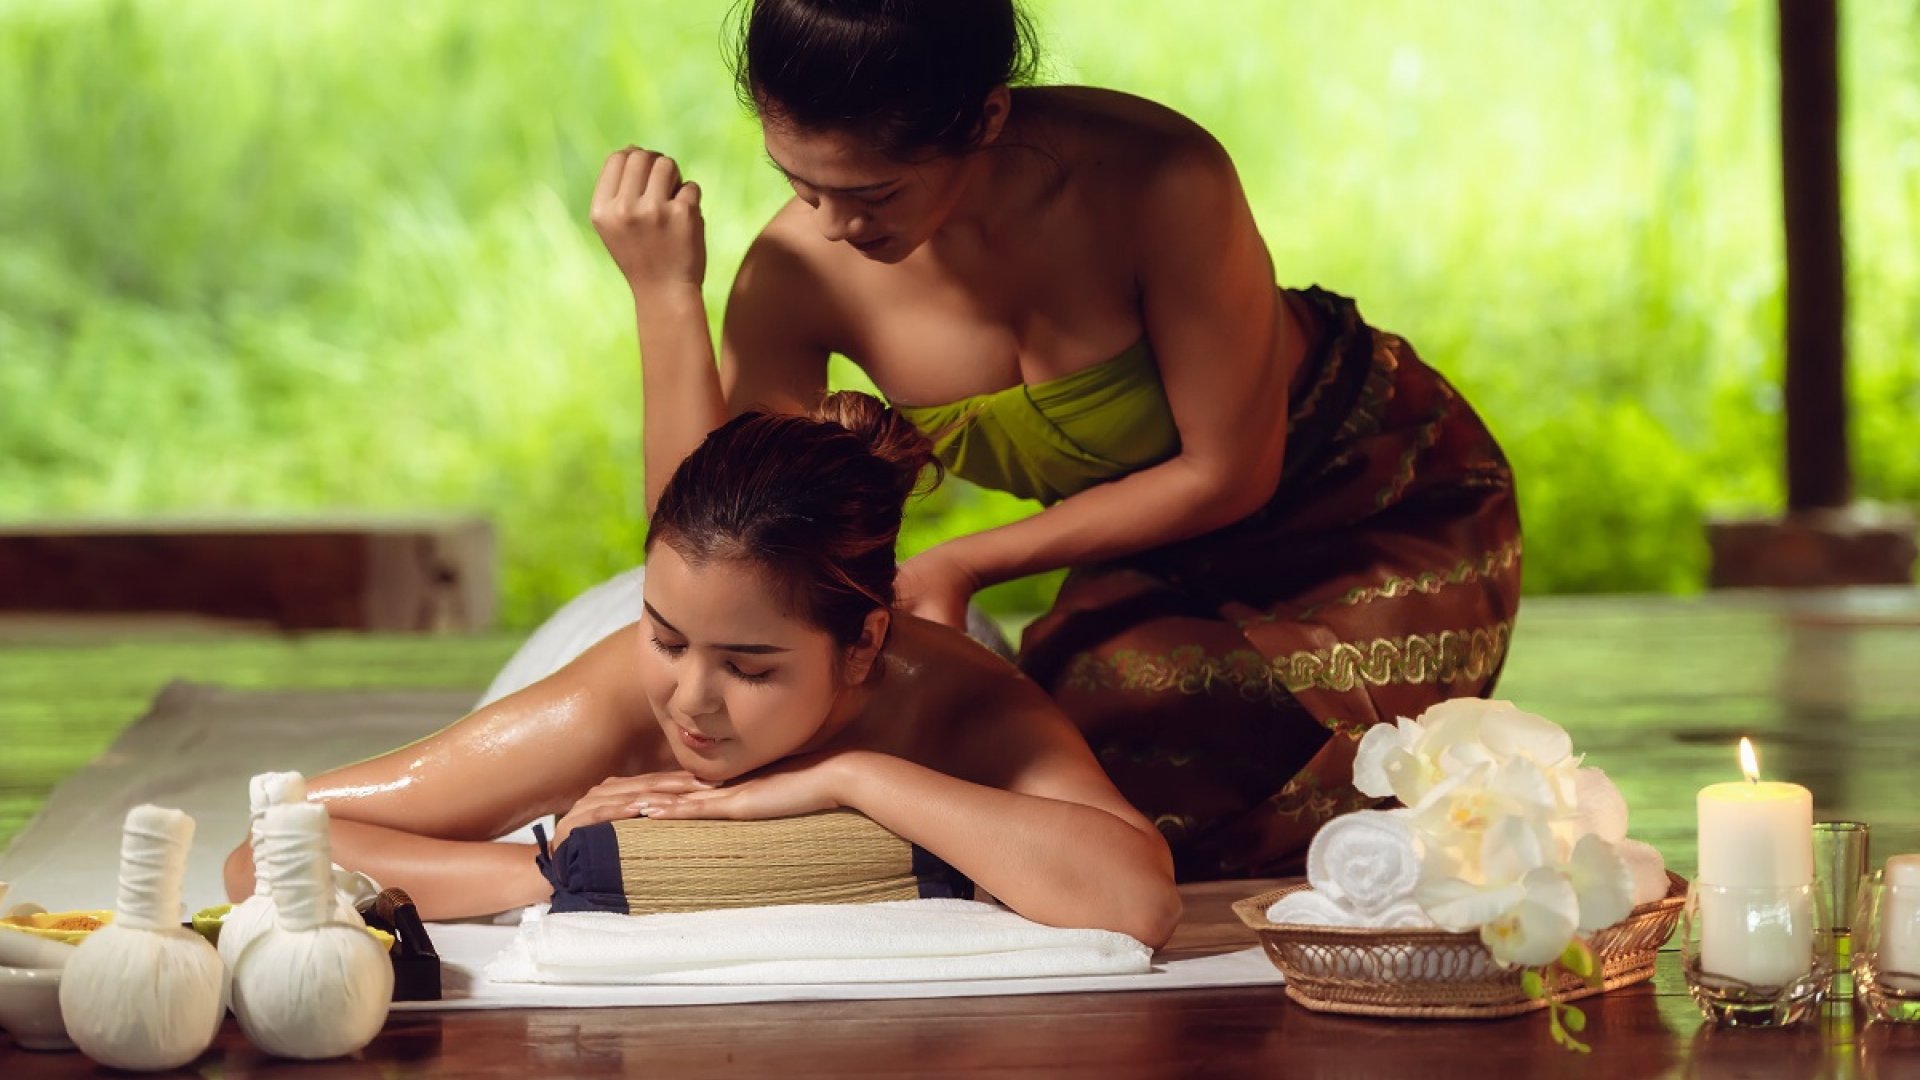 AMARI BALANCE CAMP - pobyt z masażami tajskimi!